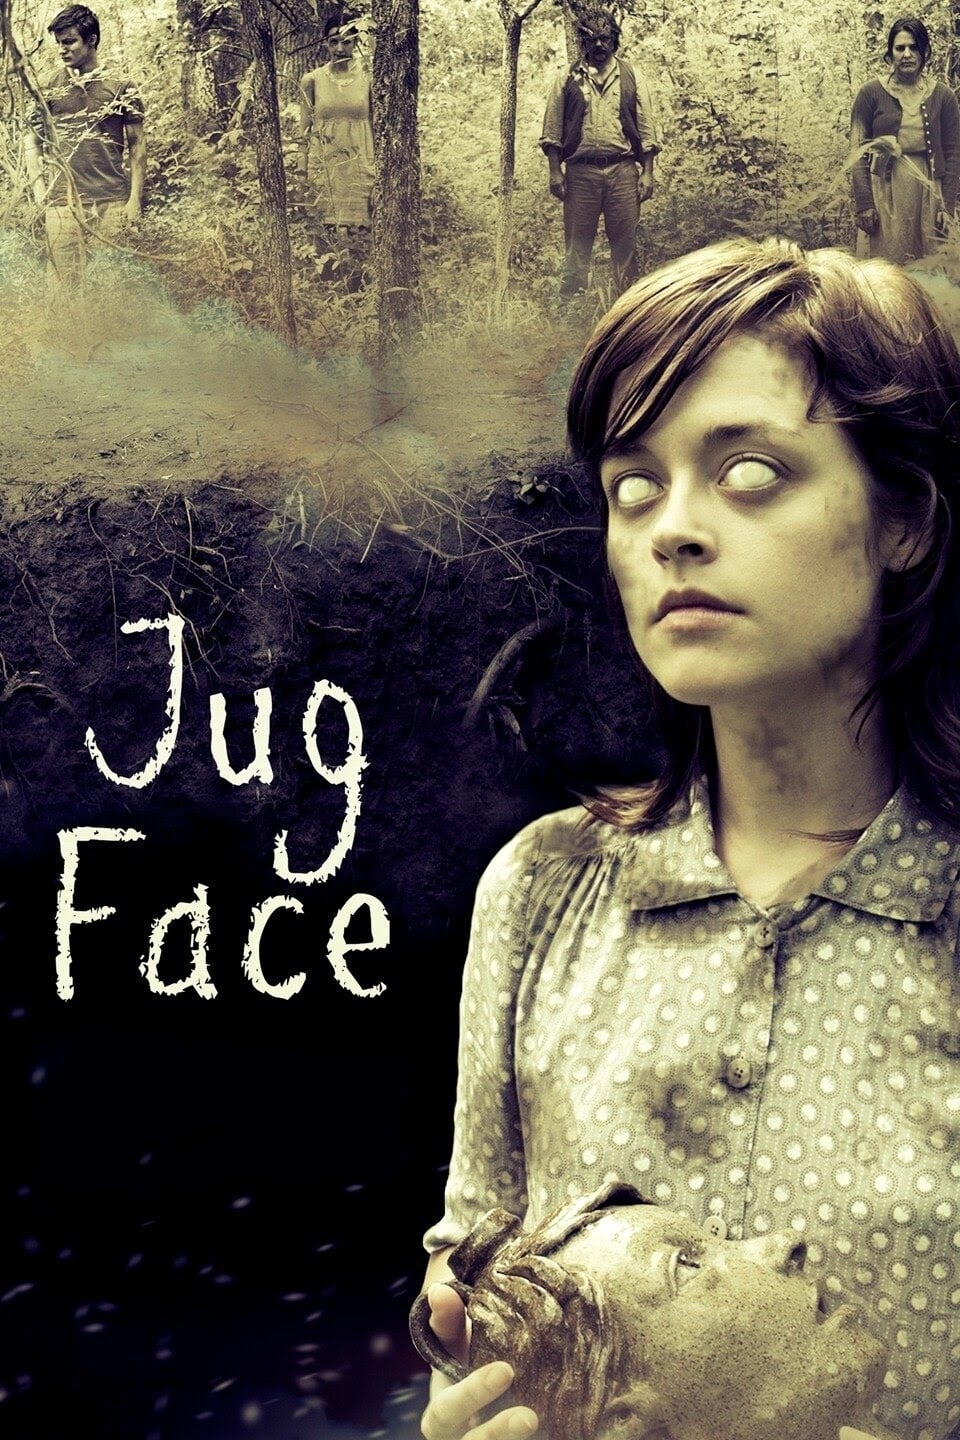 Jug Face [Sub-ITA] (2013)